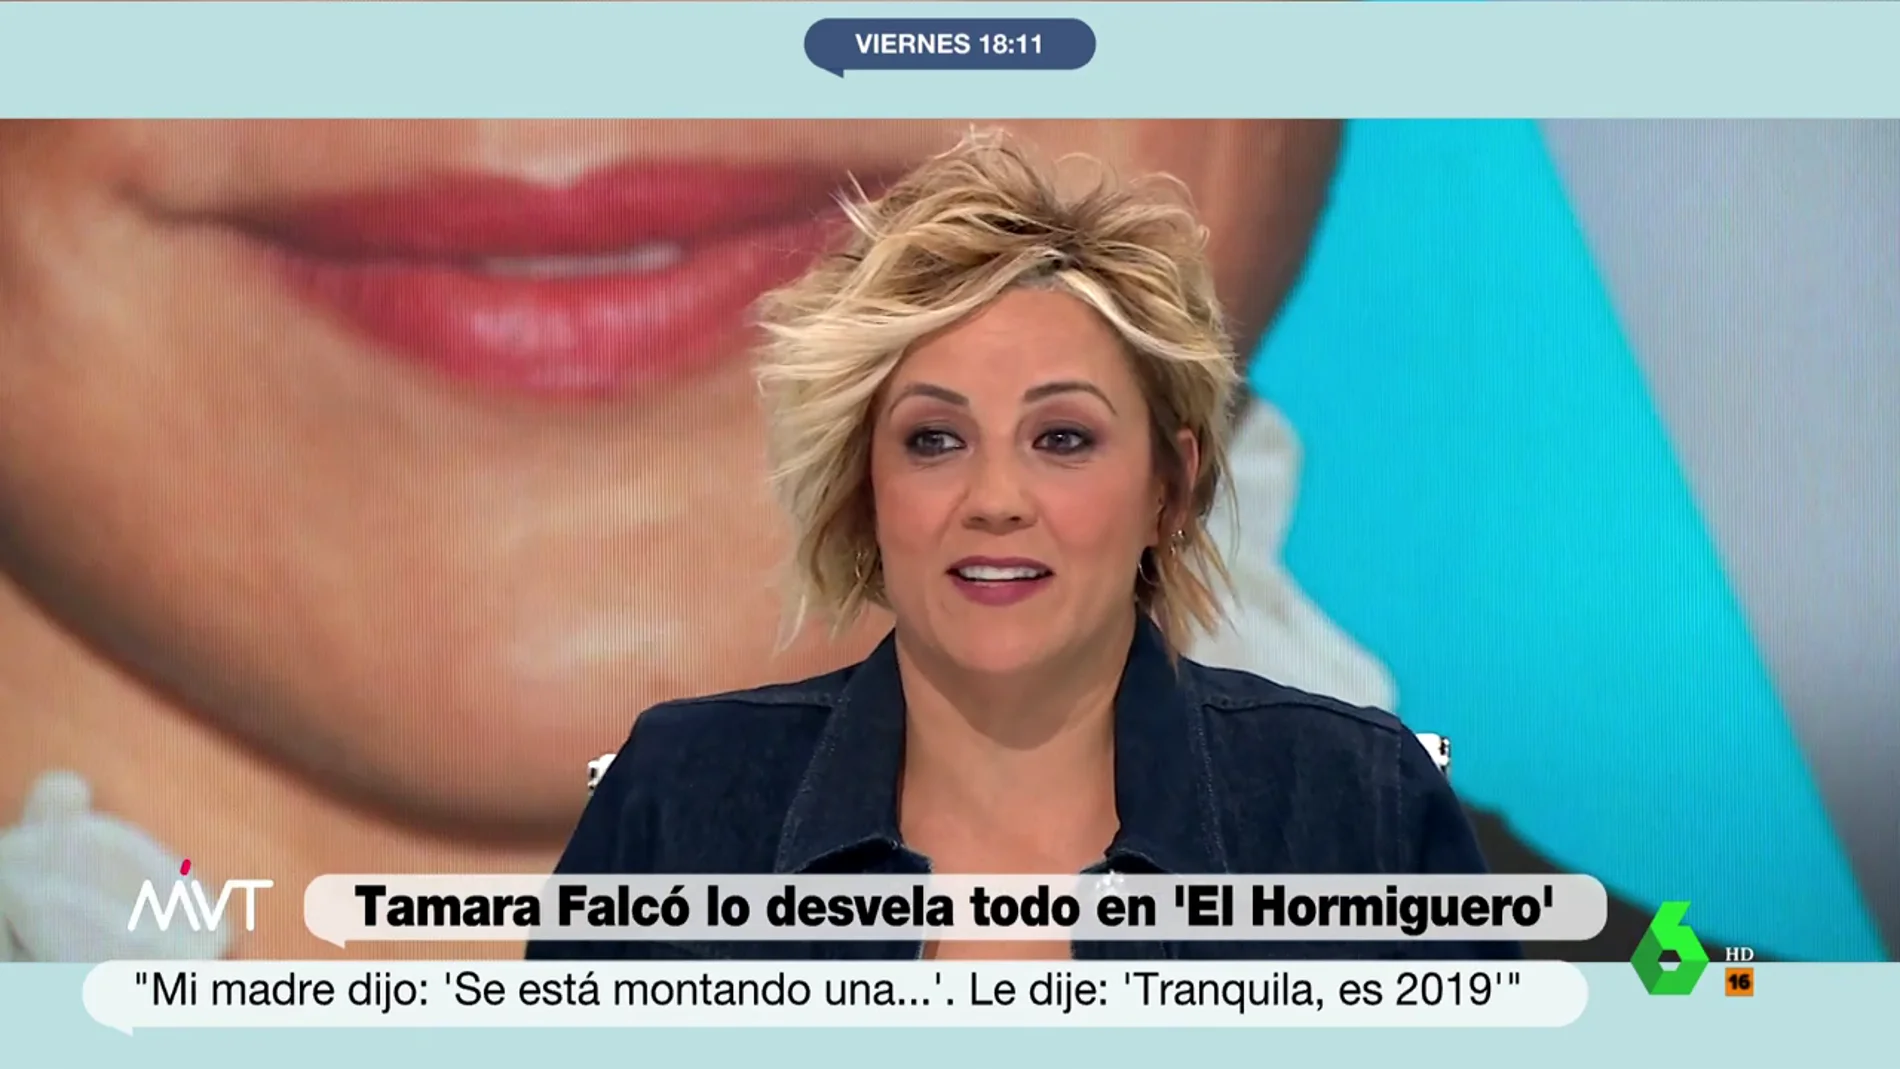 Cristina Pardo retrata a Íñigo Onieva tras mentir a Isabel Preysler y Tamara Falcó : "Quedó como Cagancho en Almagro"